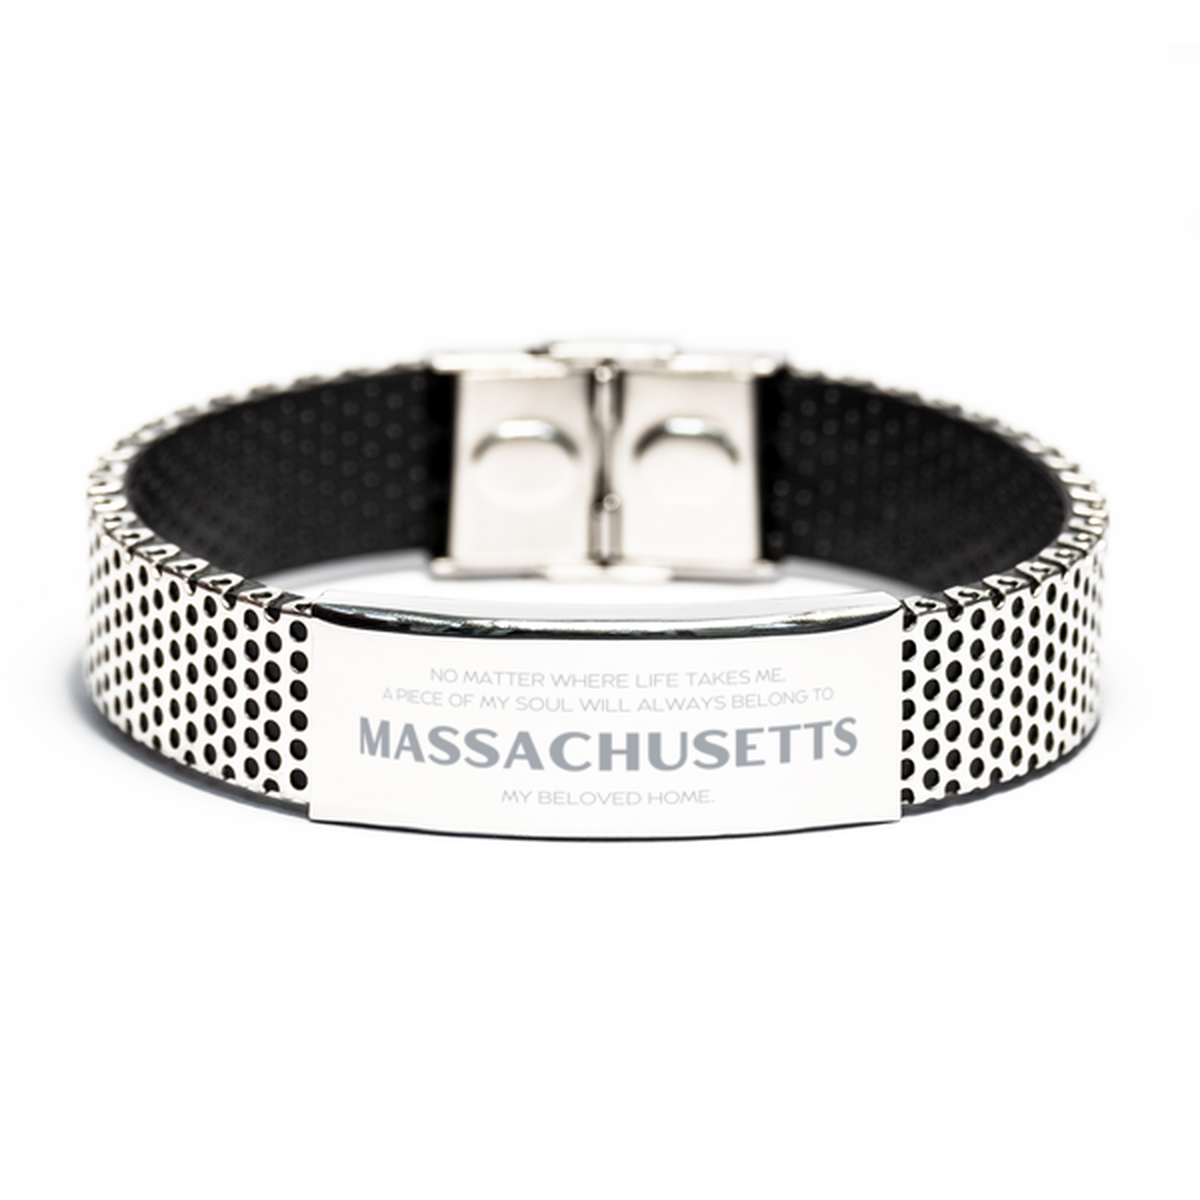 Love Massachusetts State Gifts, My soul will always belong to Massachusetts, Proud Stainless Steel Bracelet, Birthday Unique Gifts For Massachusetts Men, Women, Friends